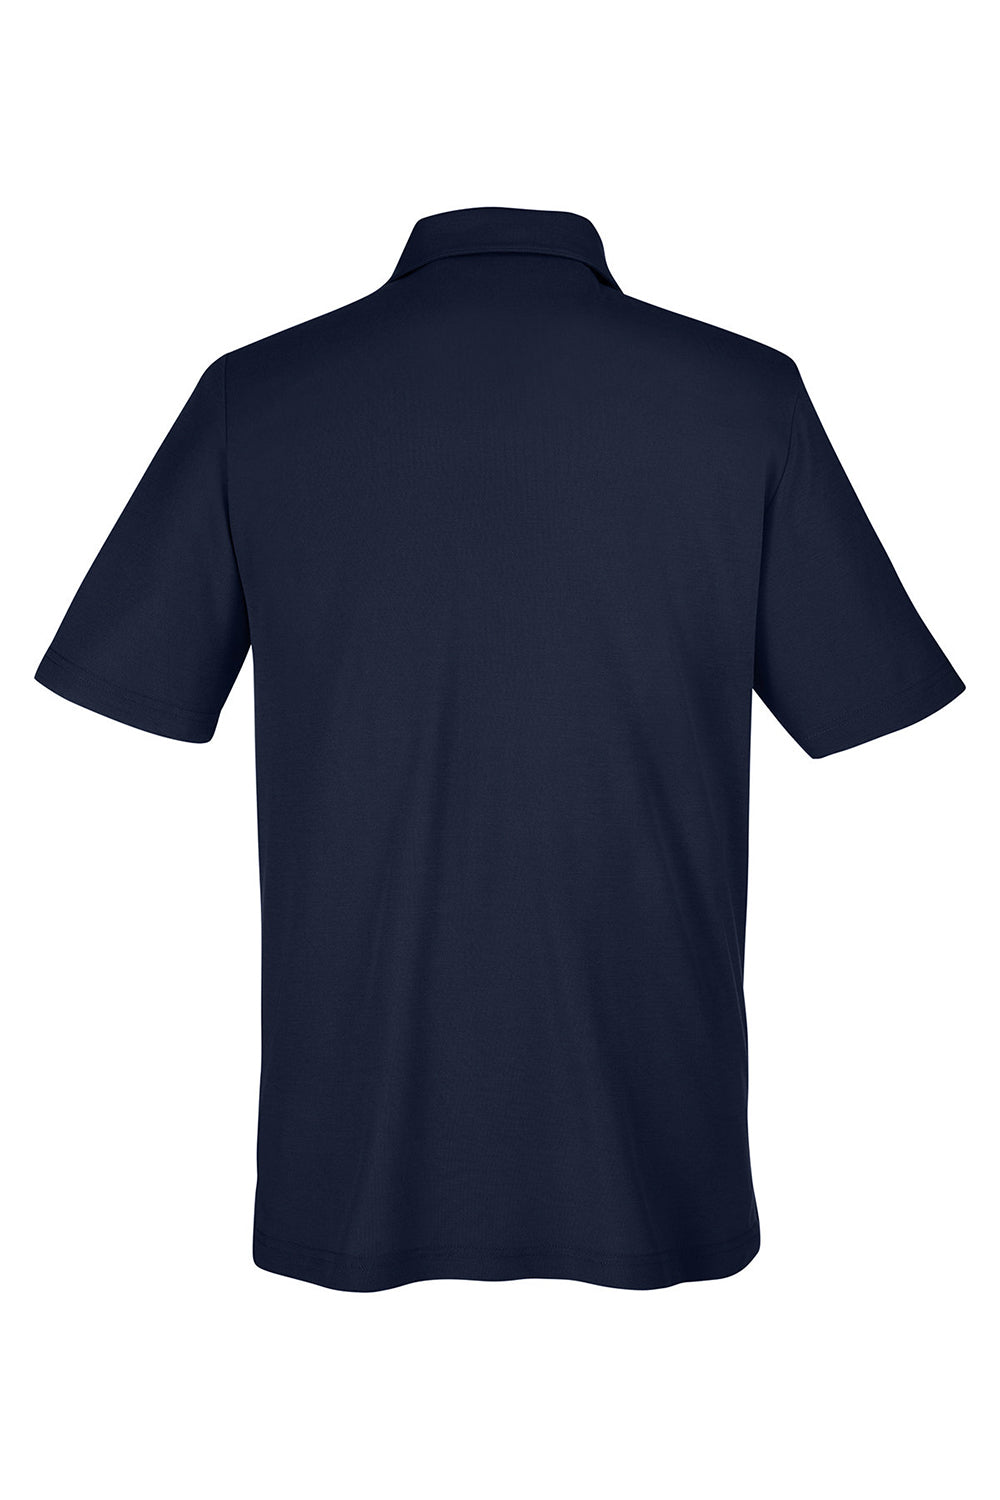 Core 365 CE112 Mens Fusion ChromaSoft Performance Moisture Wicking Short Sleeve Polo Shirt Classic Navy Blue Flat Back